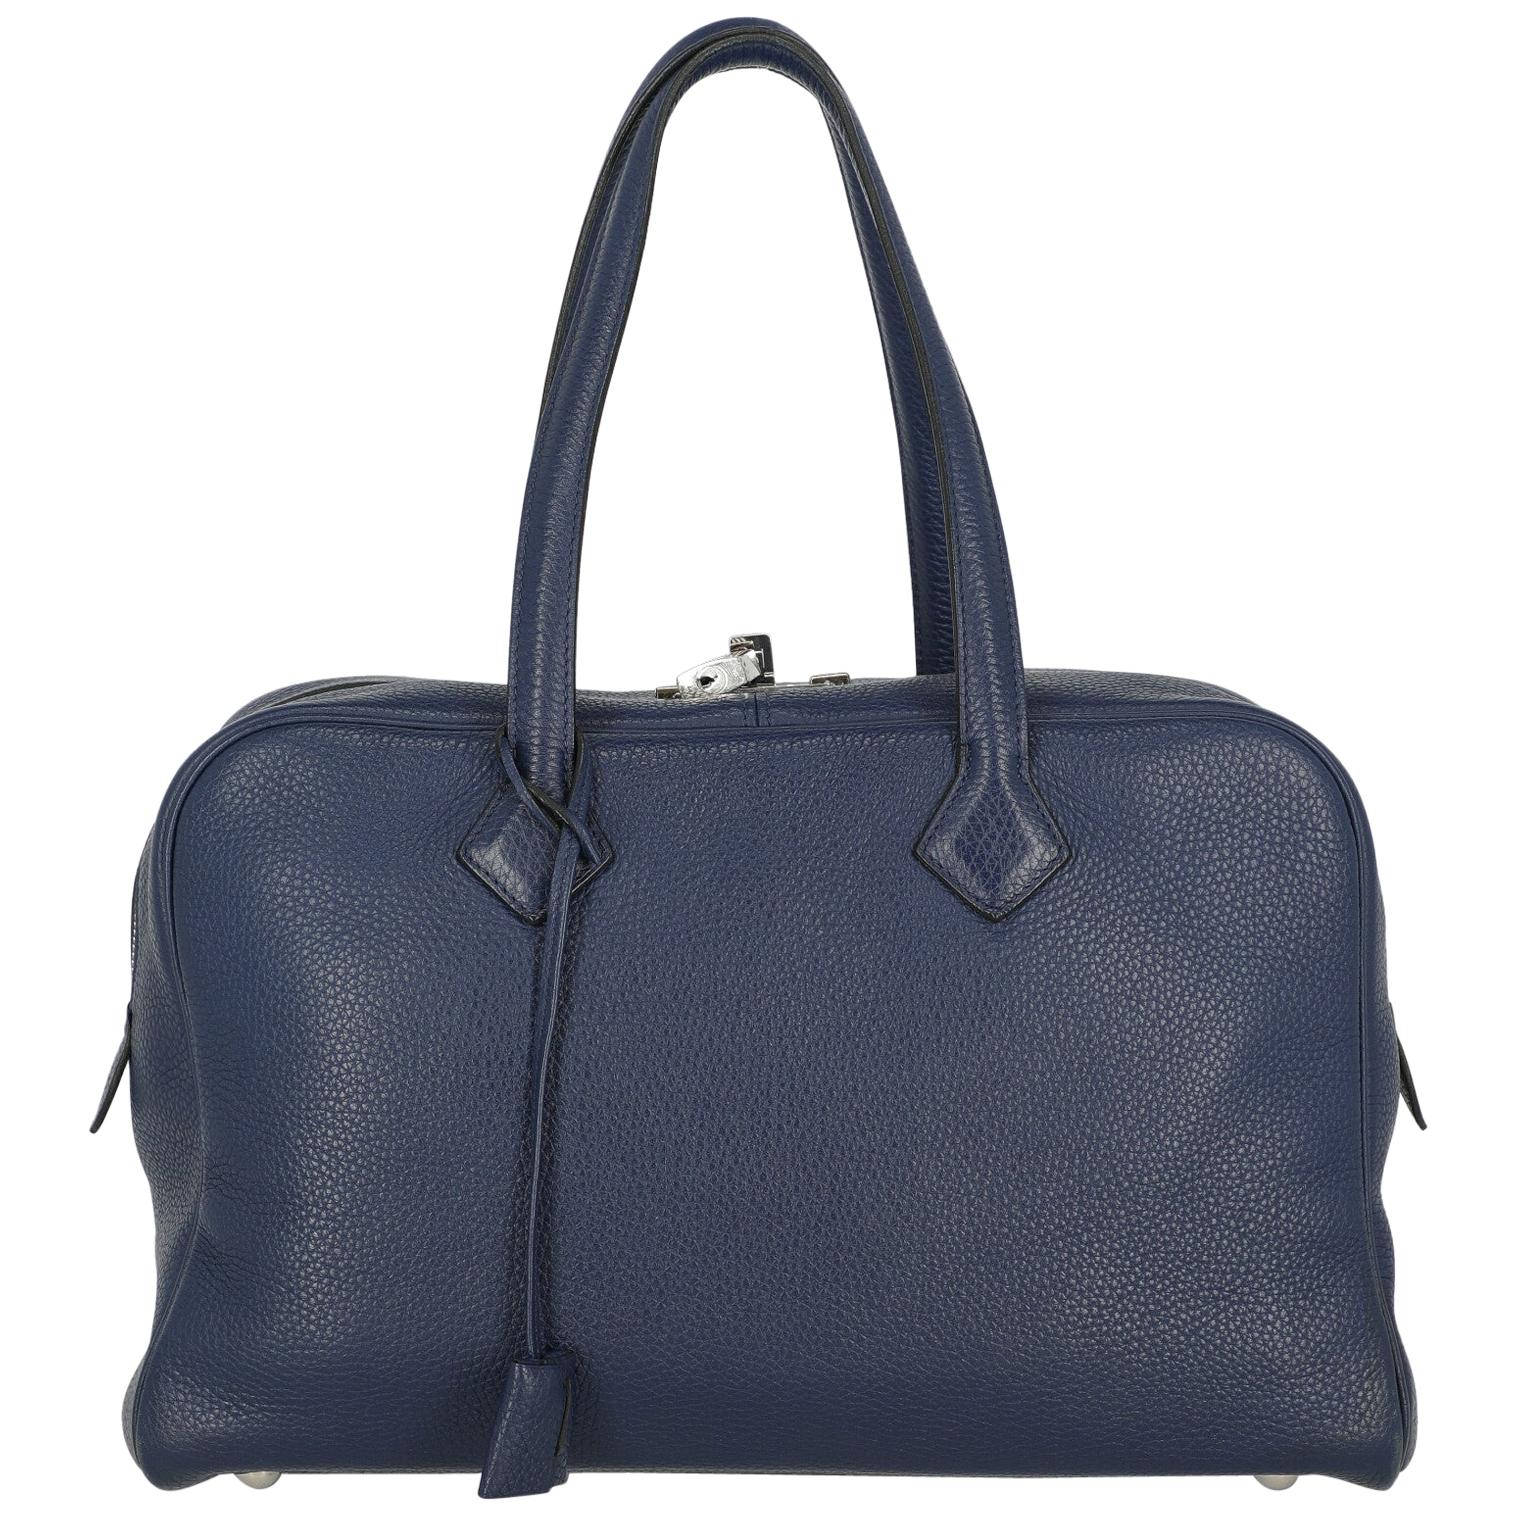 Hermès Women's Handbag Victoria Navy Leather For Sale